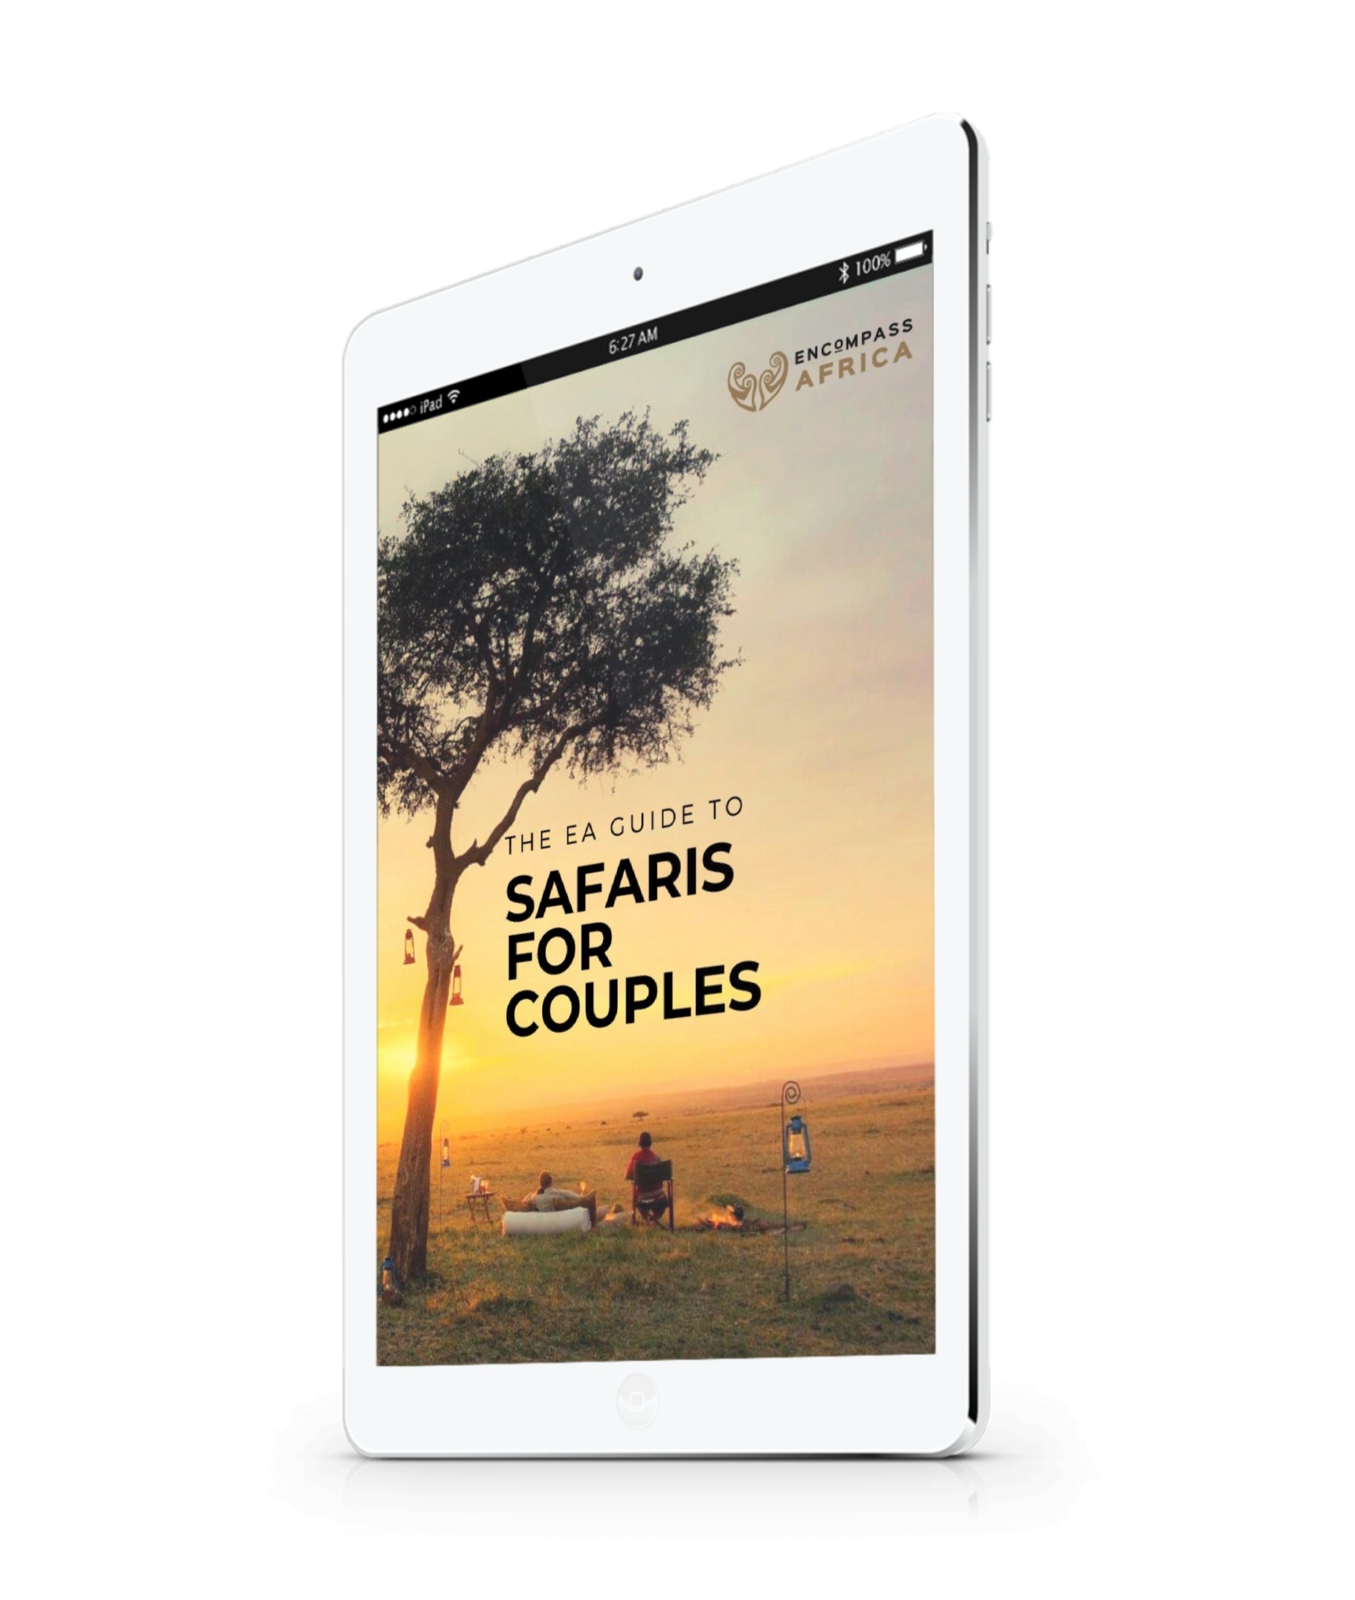 Safaris for couples